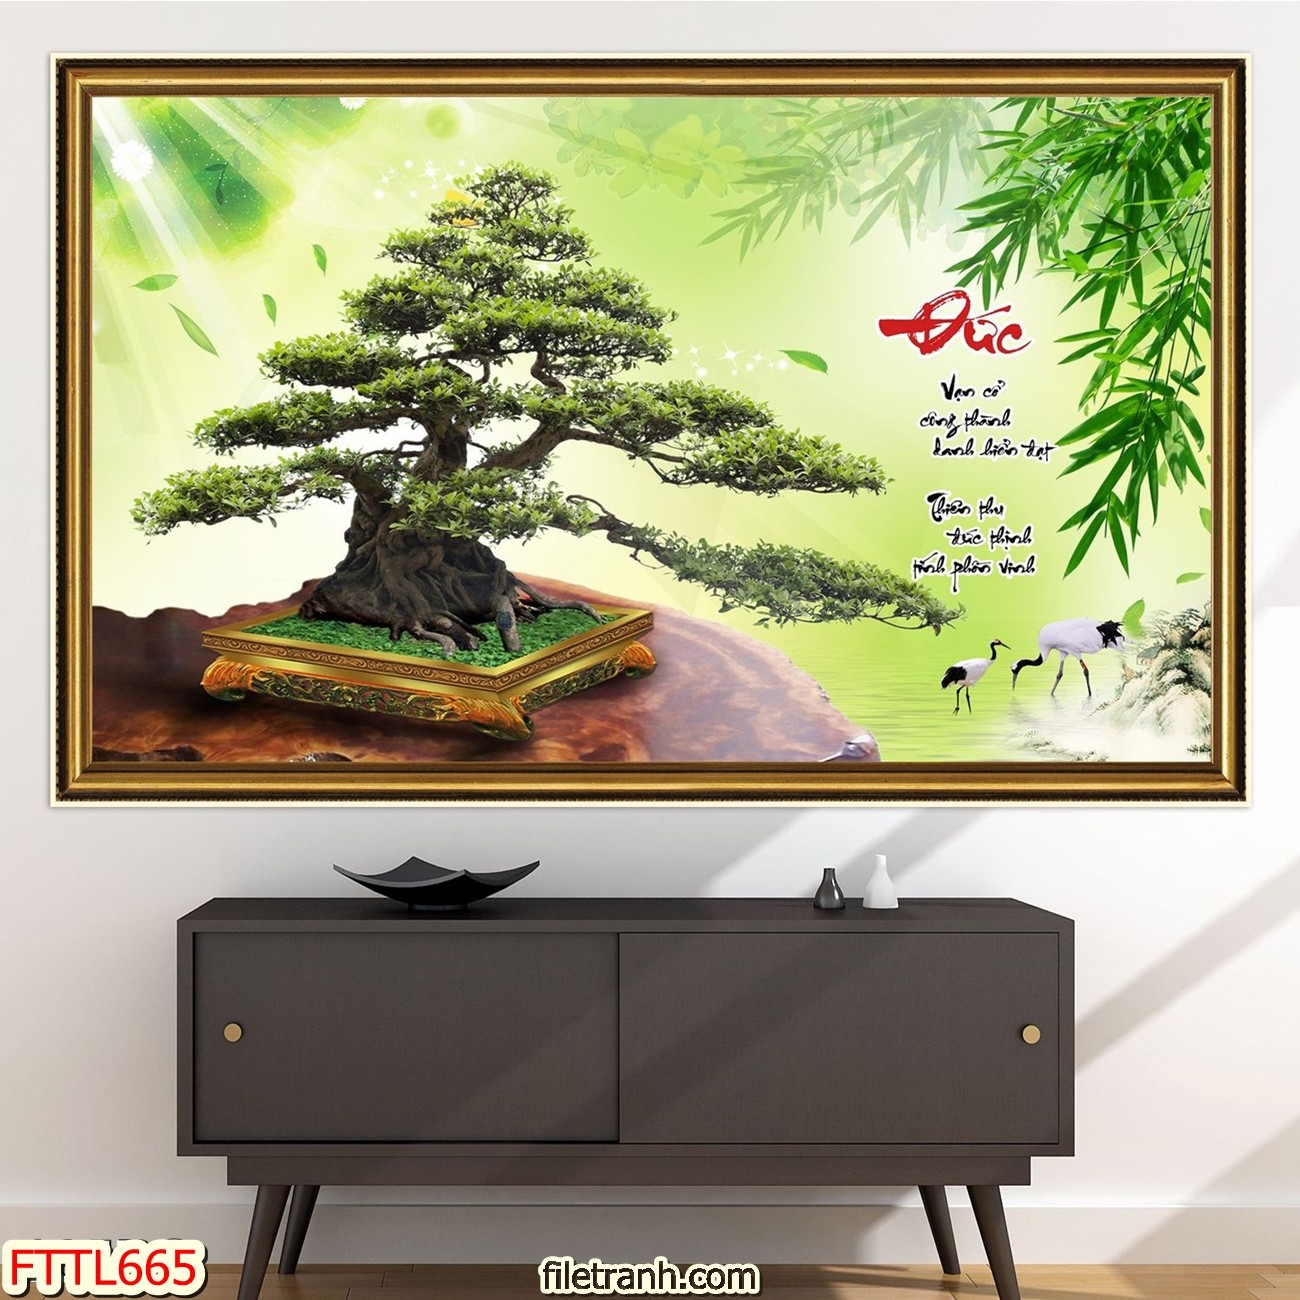 https://filetranh.com/file-tranh-chau-mai-bonsai/file-tranh-chau-mai-bonsai-fttl665.html